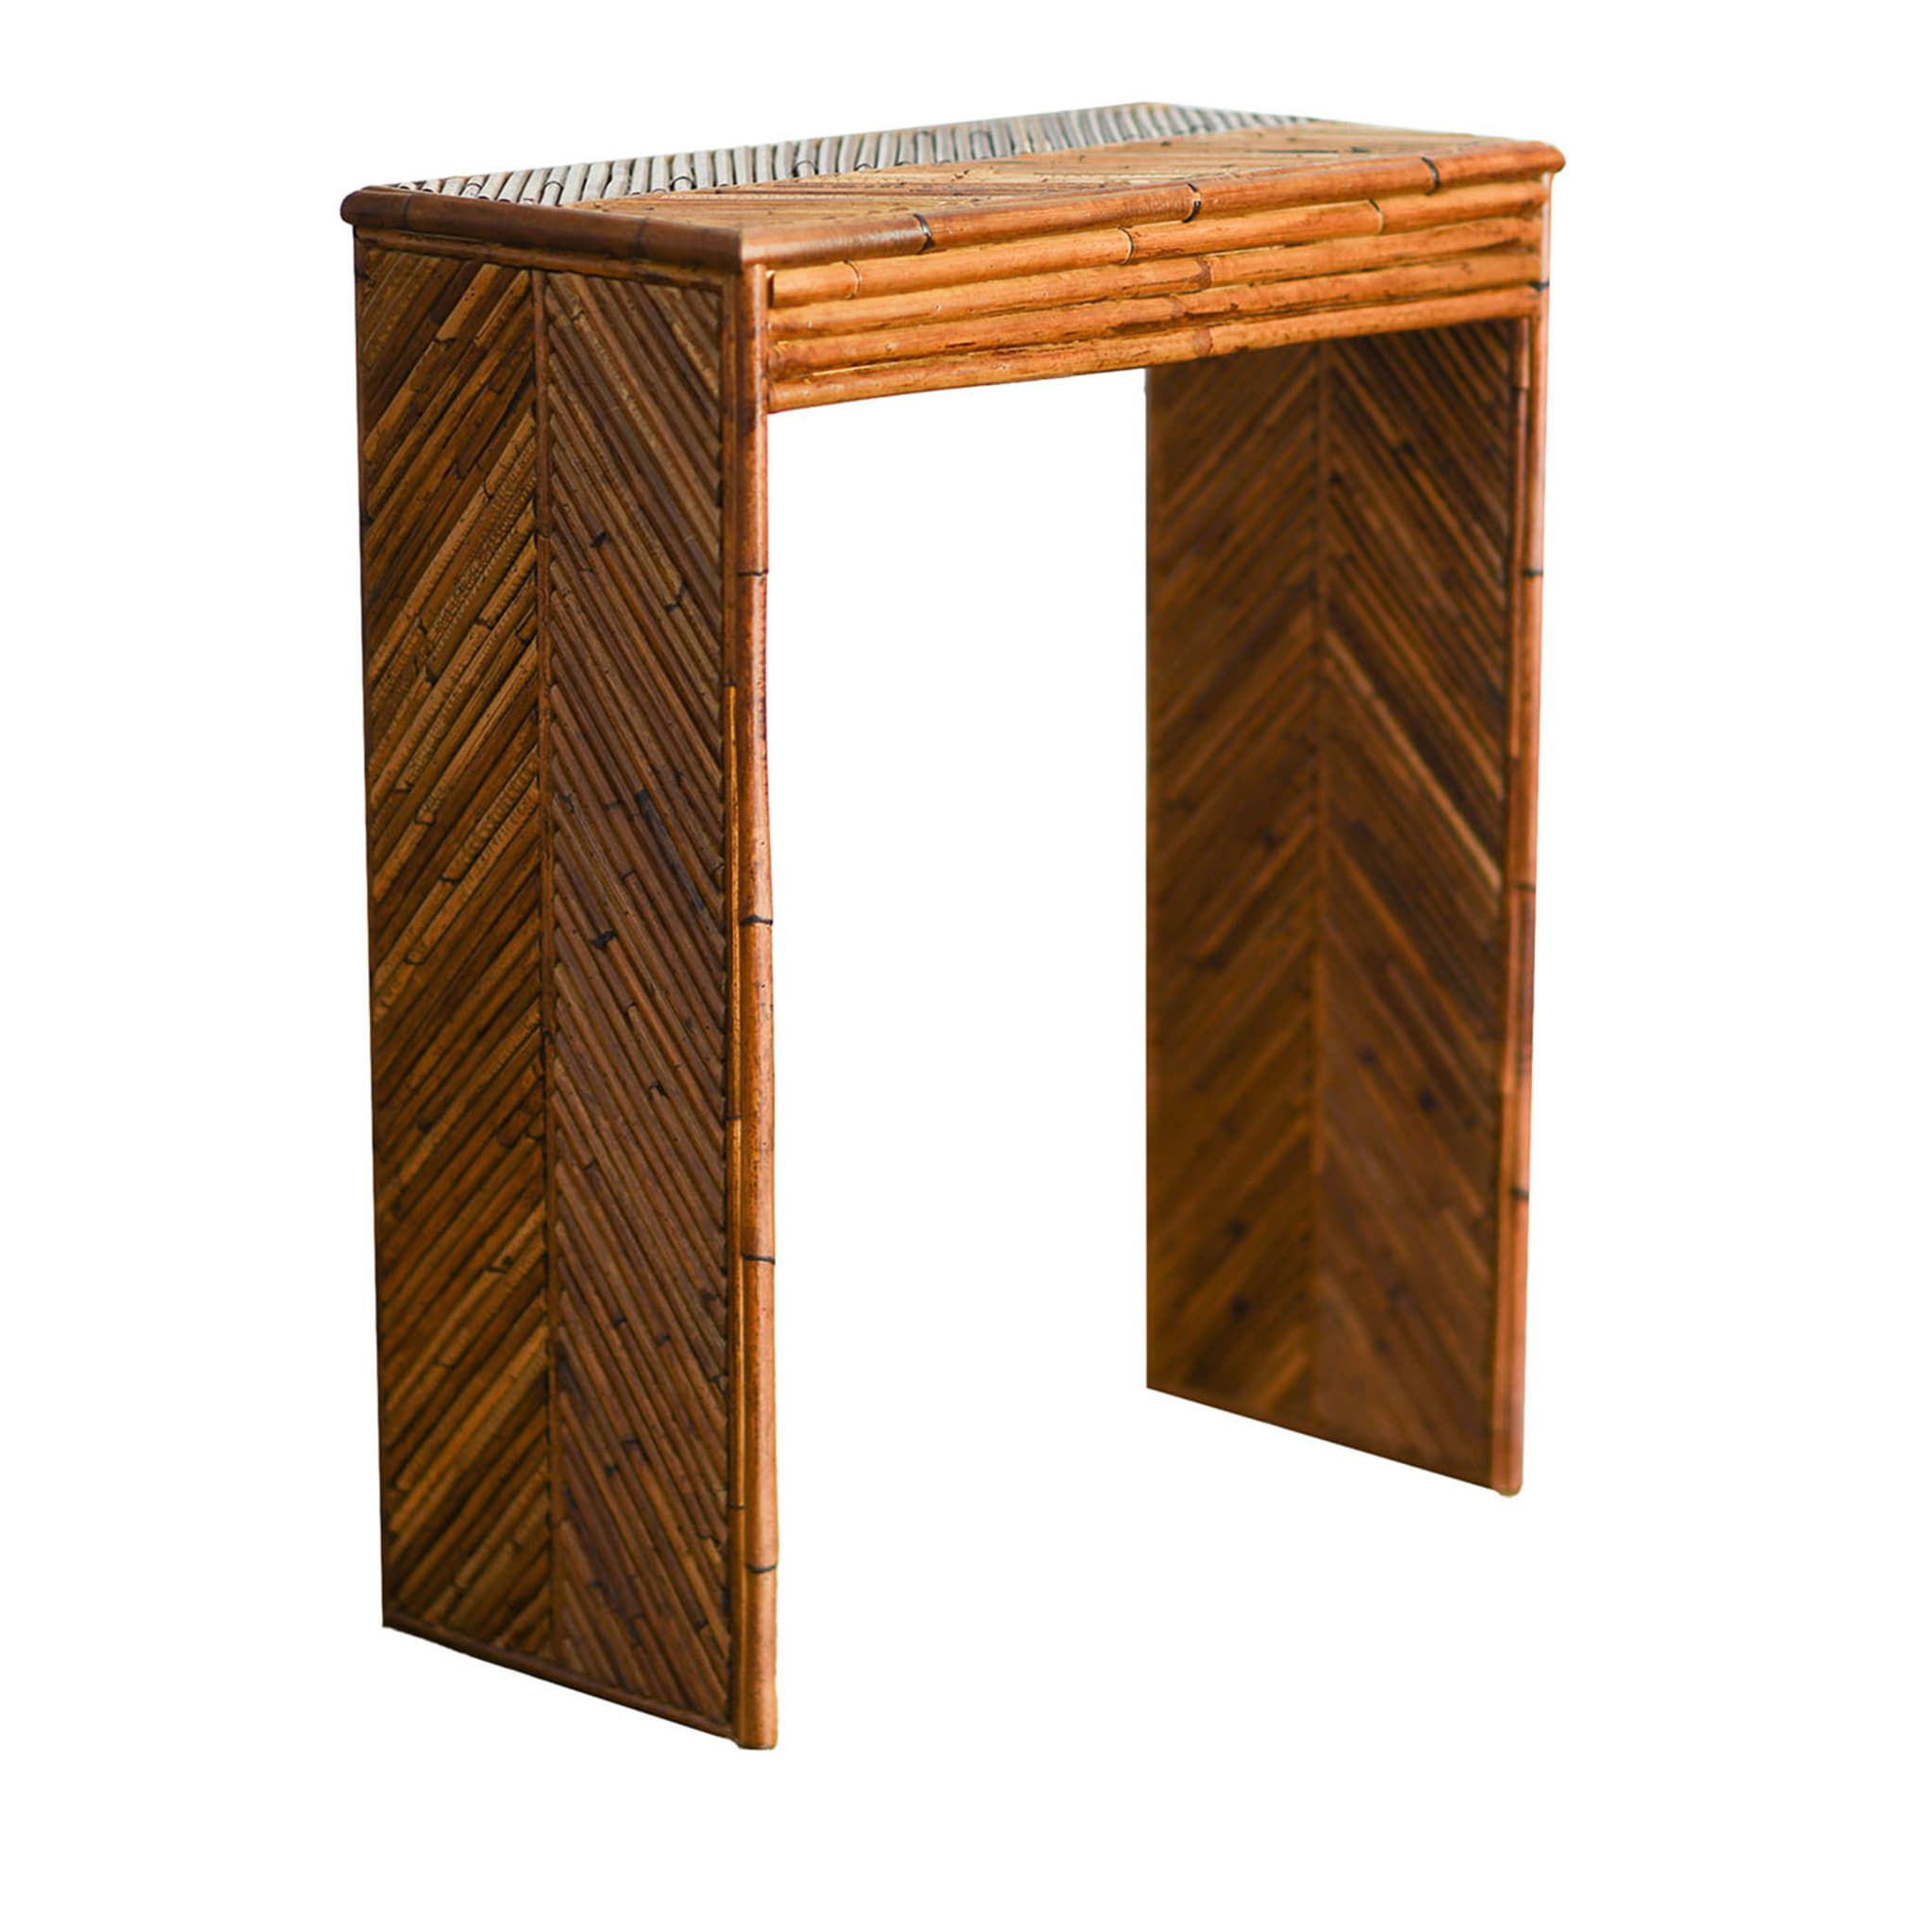 Herringbone-Patterned Bamboo Console - Main view